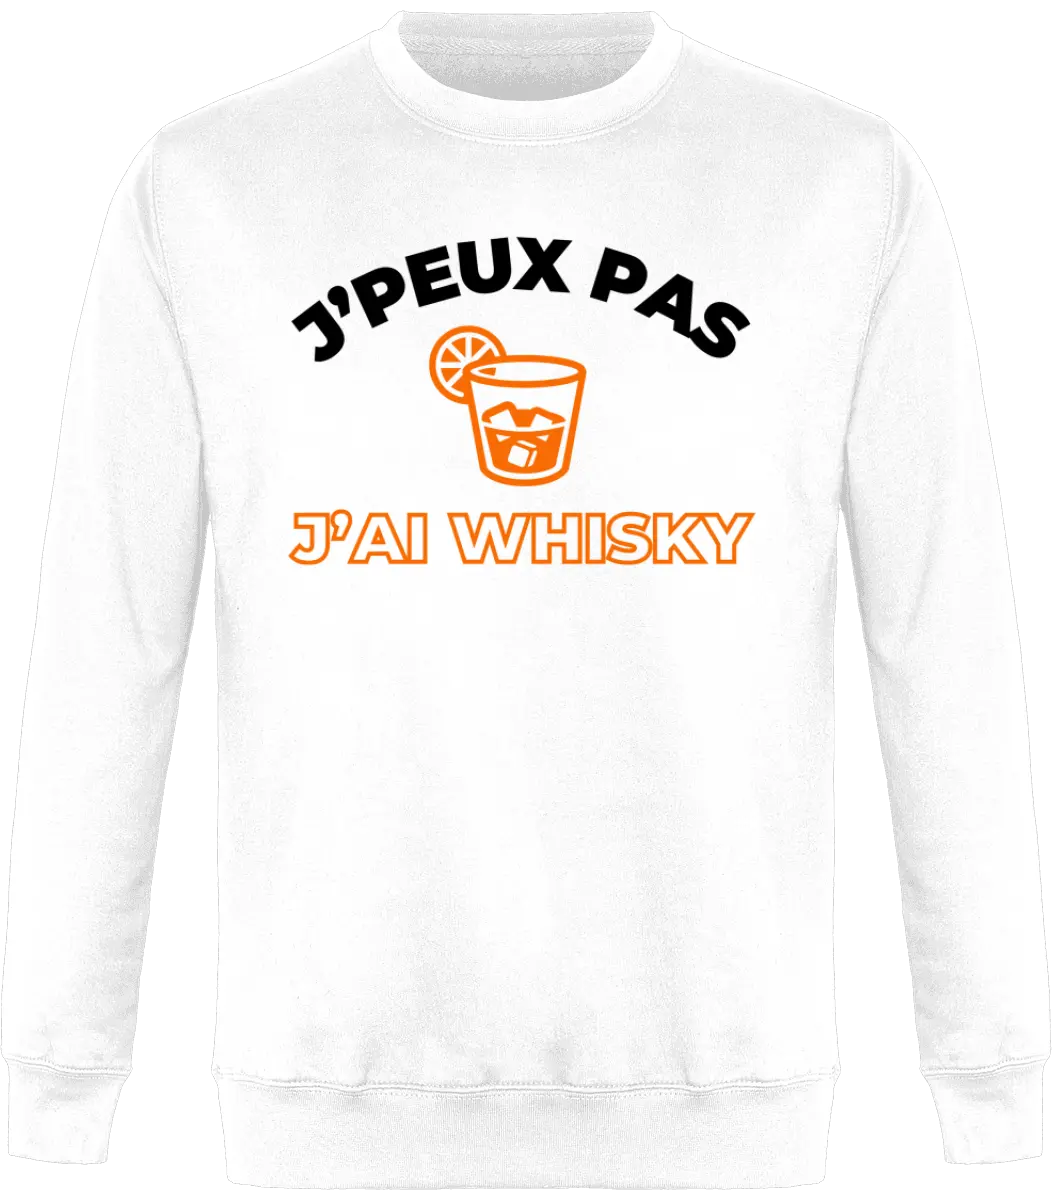 Sweat Whisky "J'peux pas j'ai whisky" | Mixte - French Humour